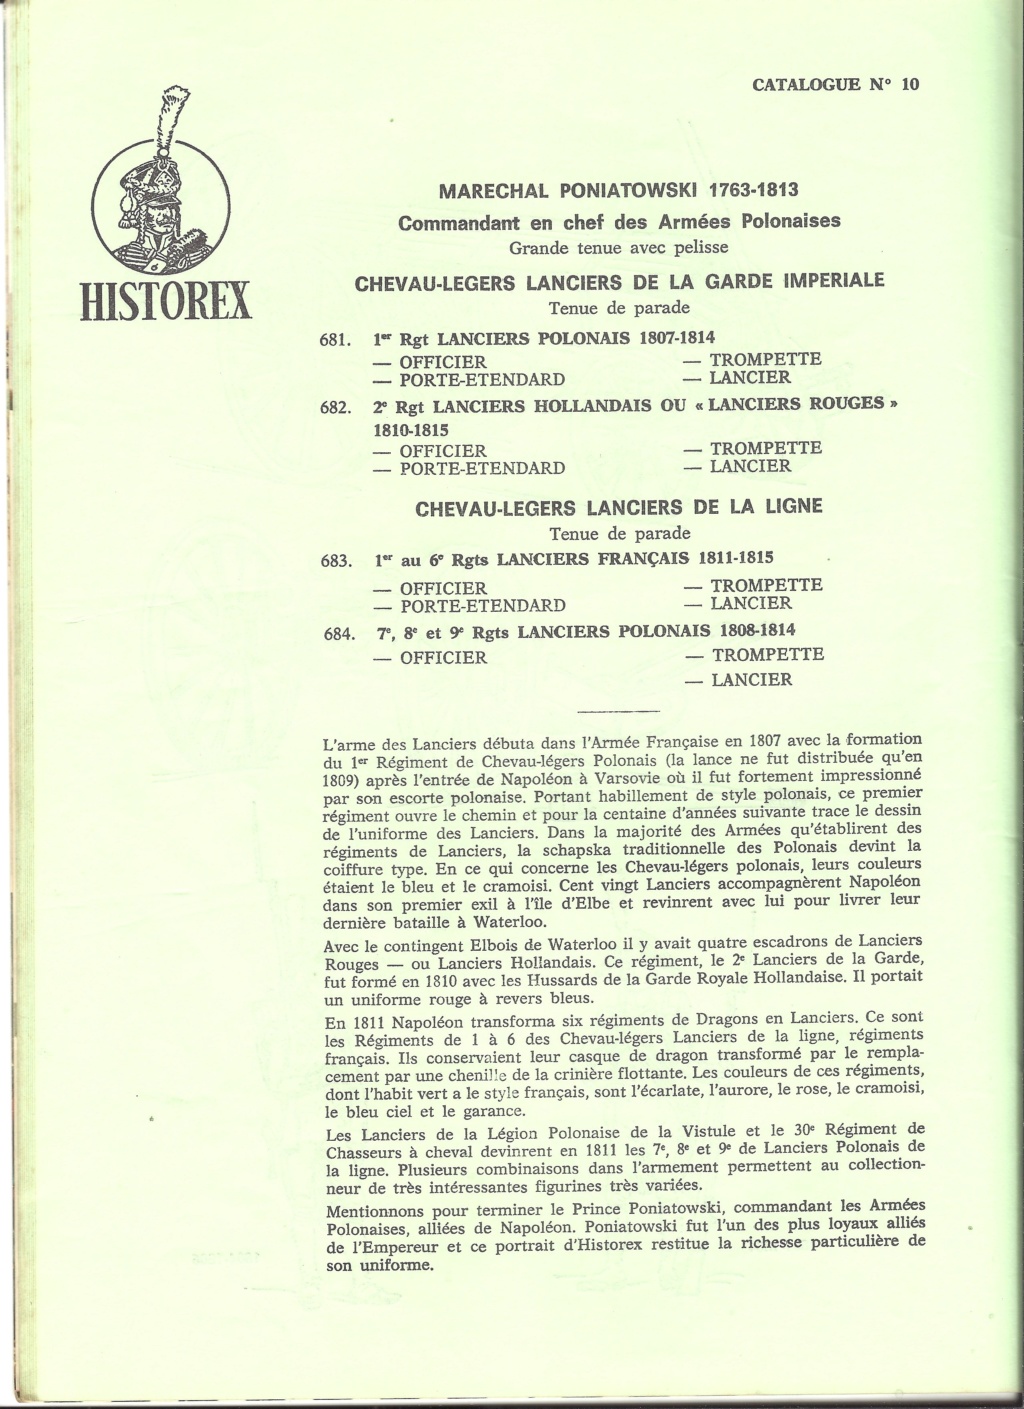 [HISTOREX 1976] Catalogue 1976  Histor36